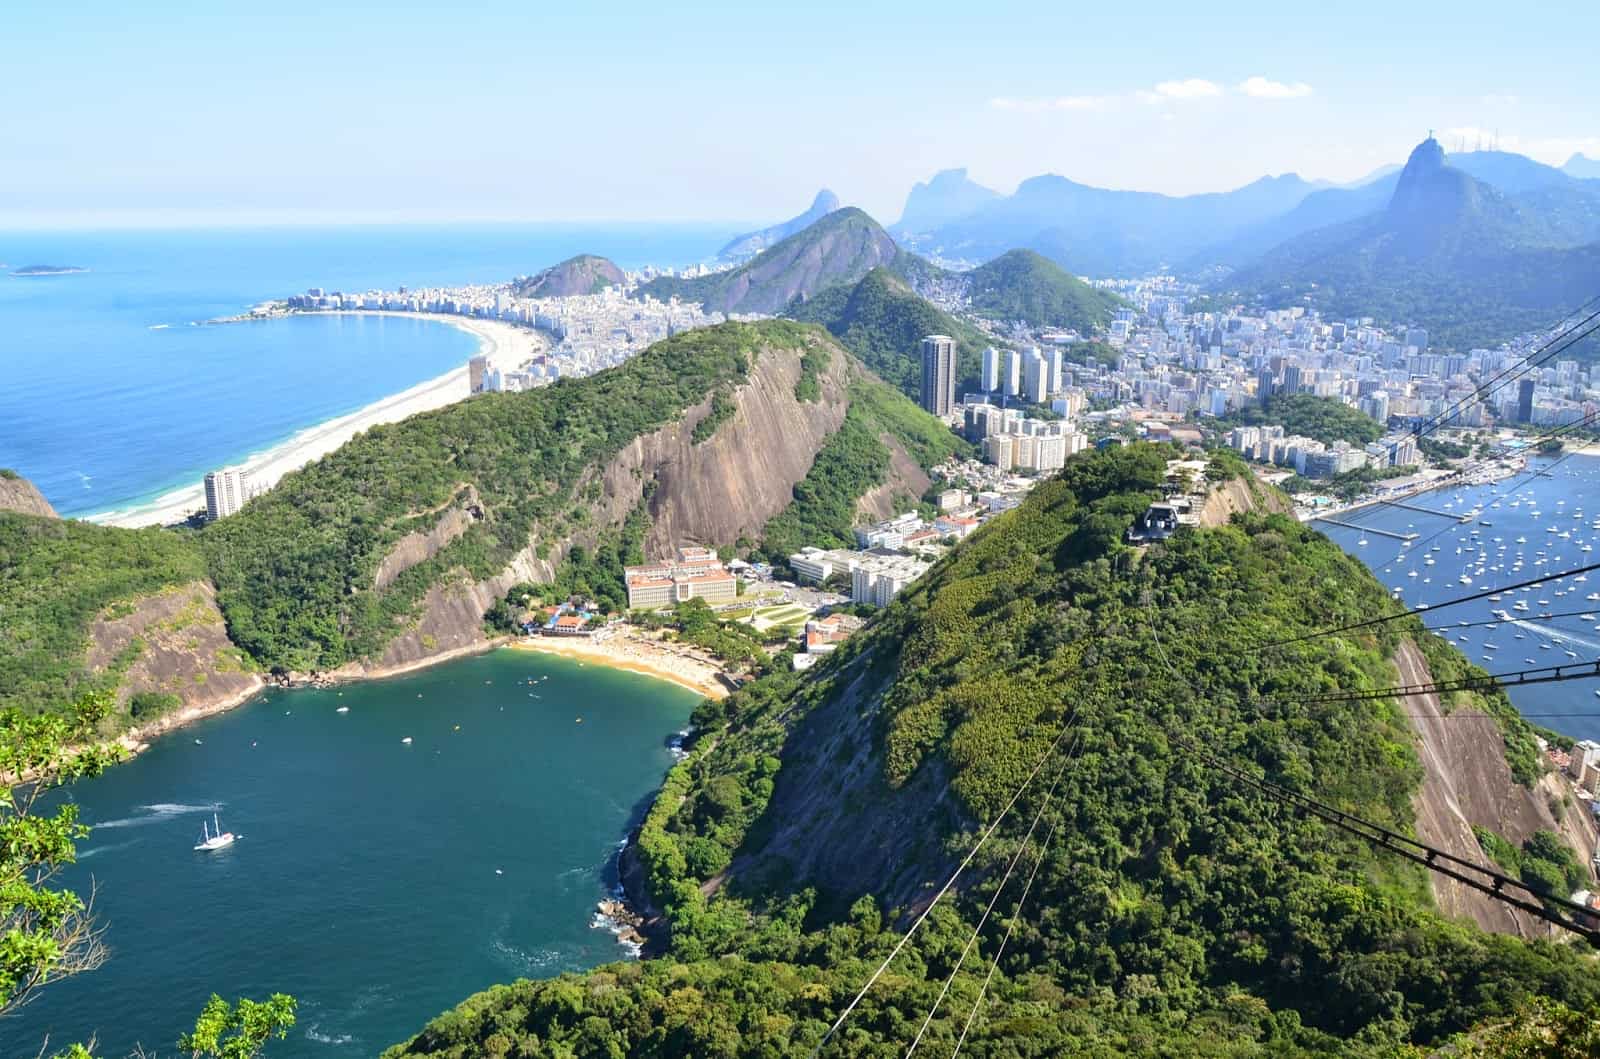 View from Sugarloaf Mountain in Rio de Janeiro, Brazil